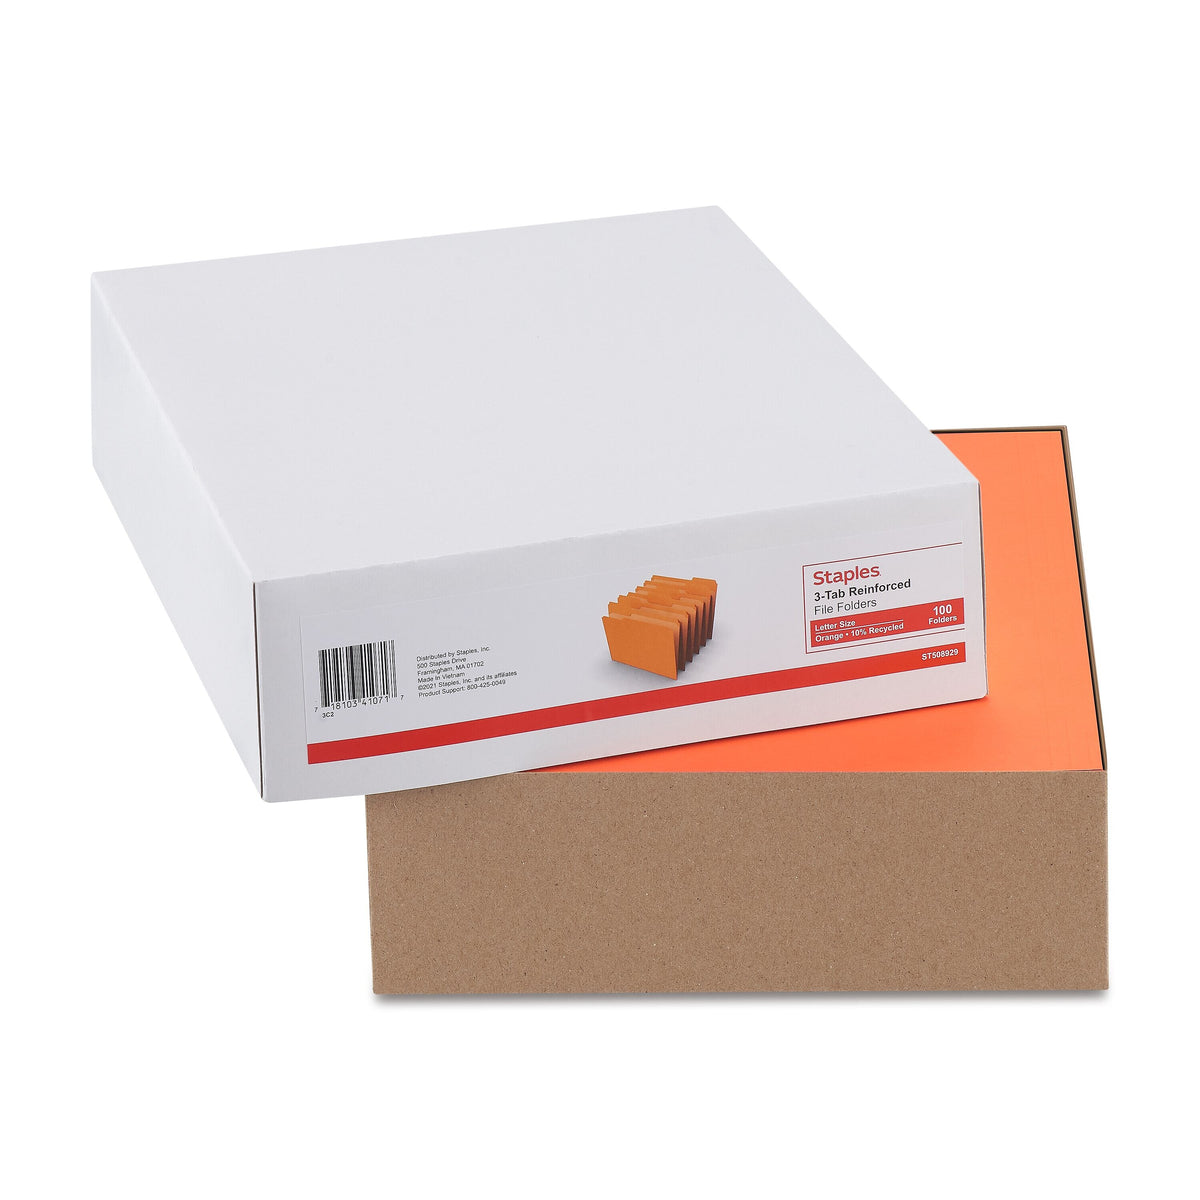 Staples Reinforced File Folder, 1/3-Cut Tab, Letter Size, Orange, 100/Box